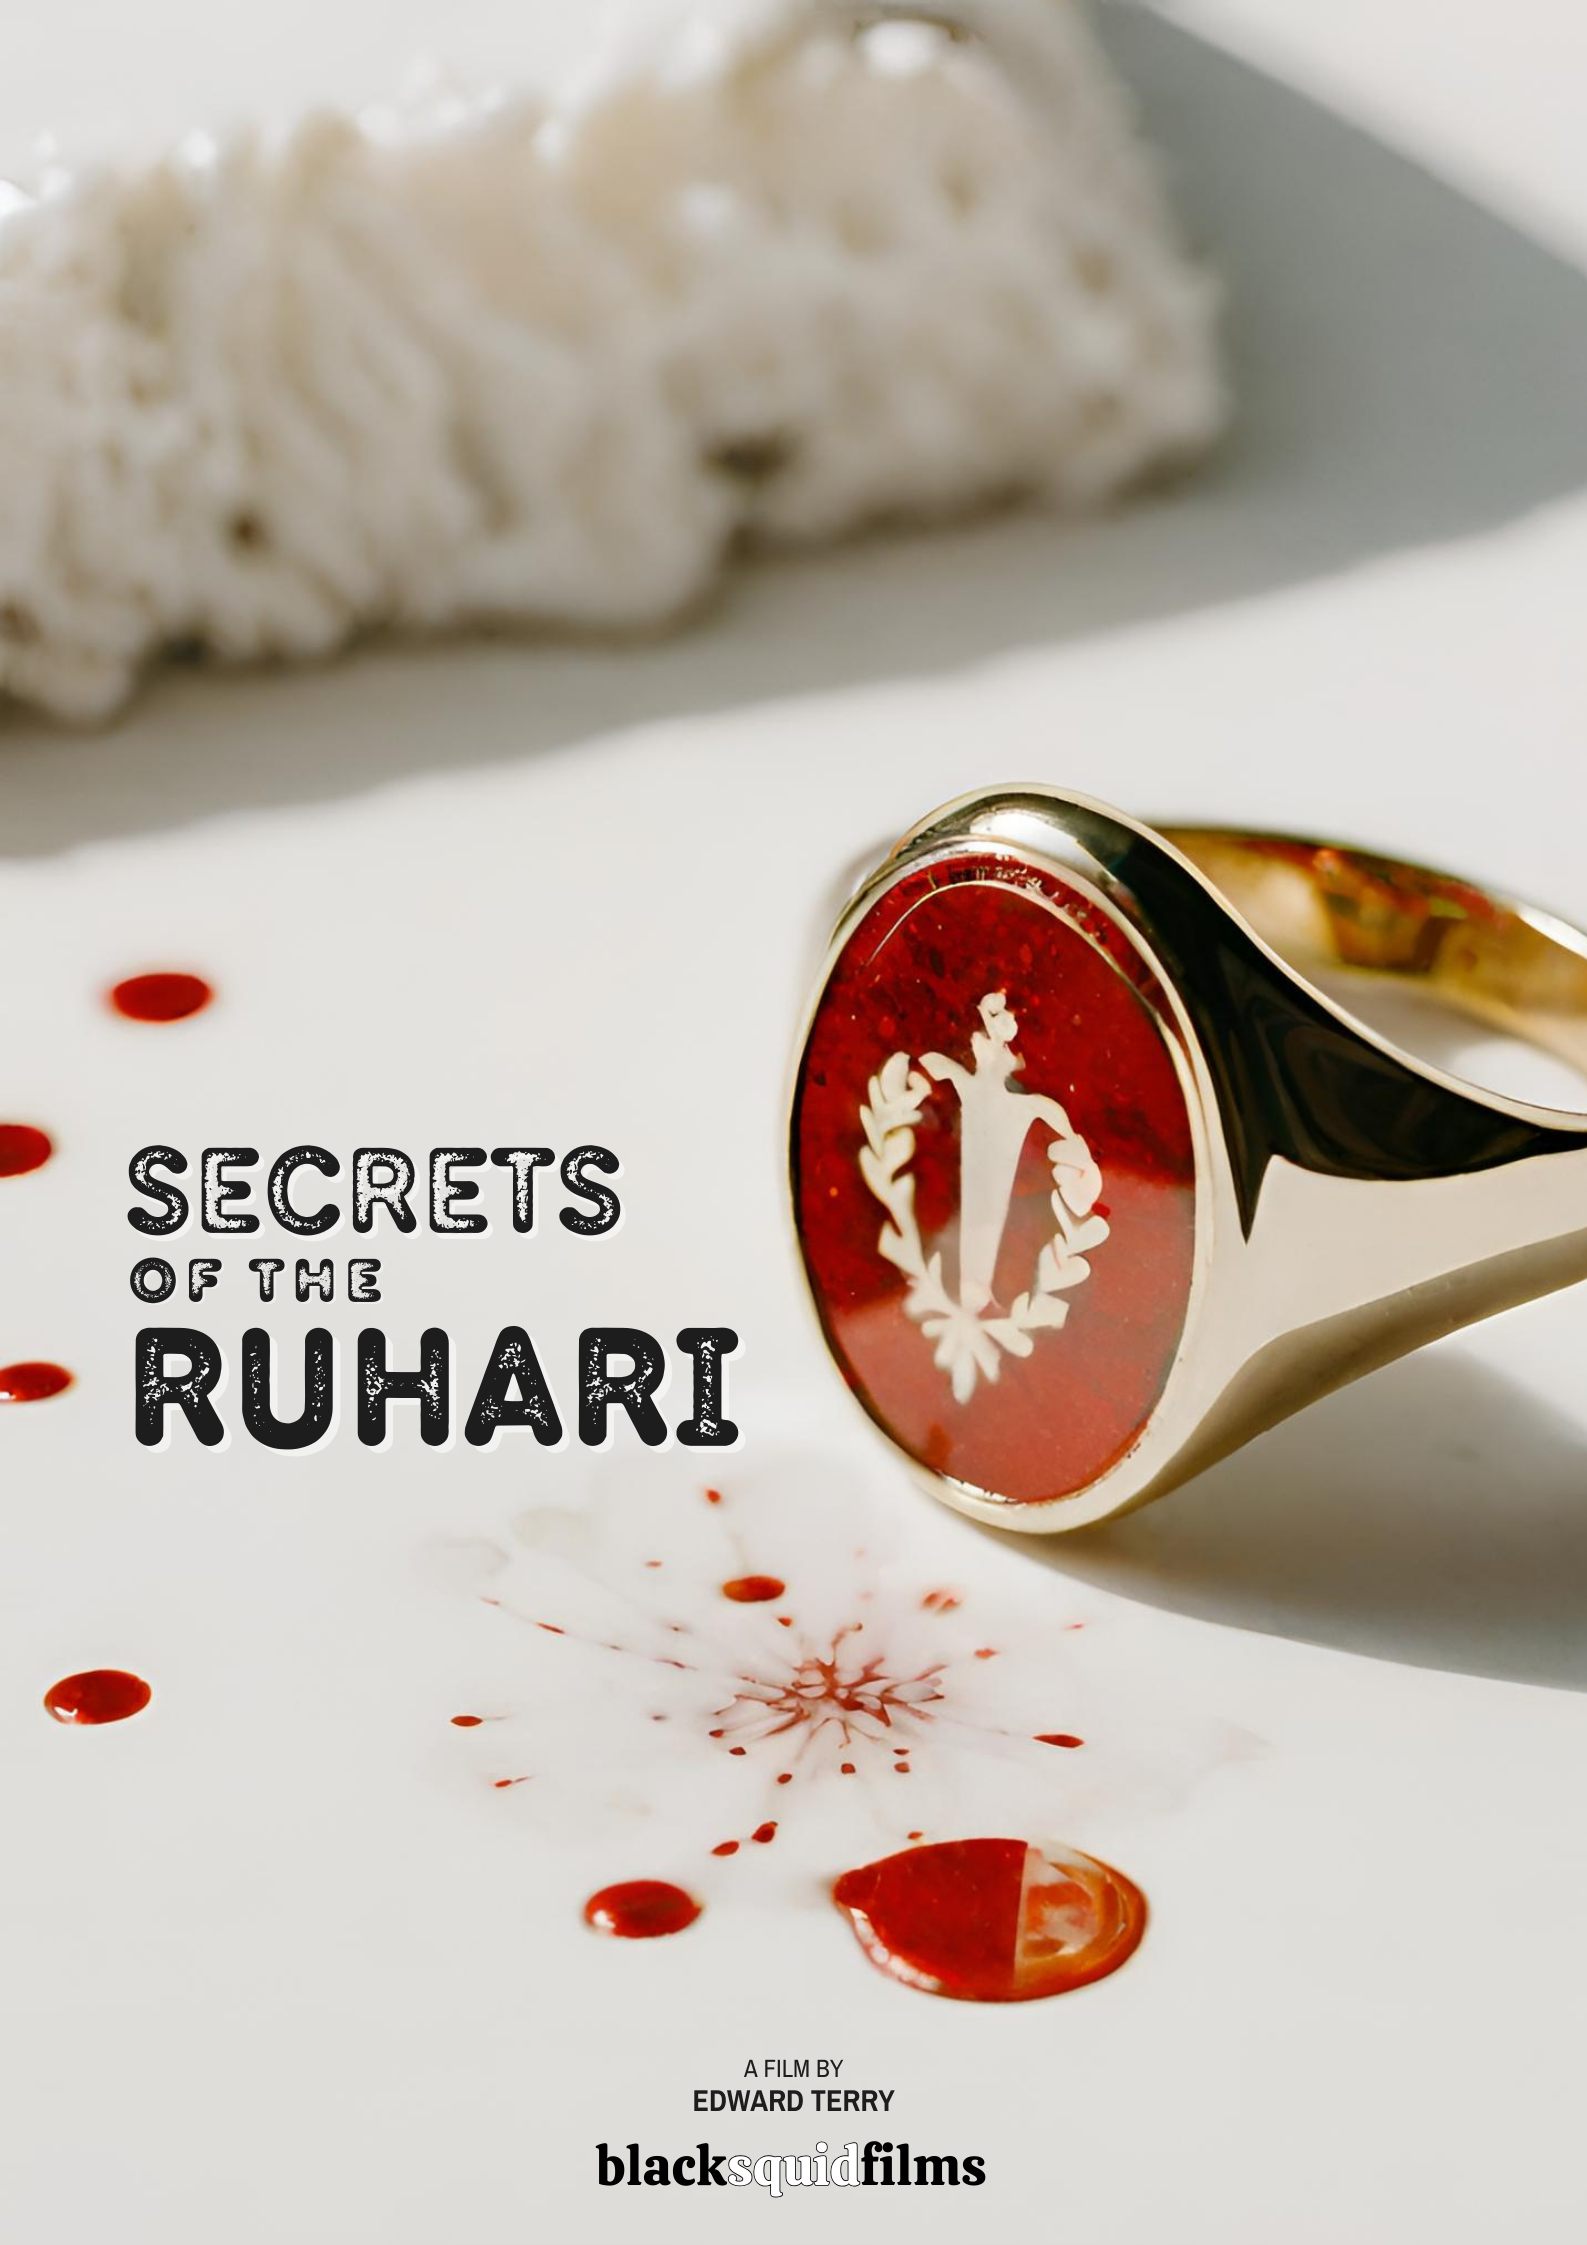 SECRETS OF THE RUHARI